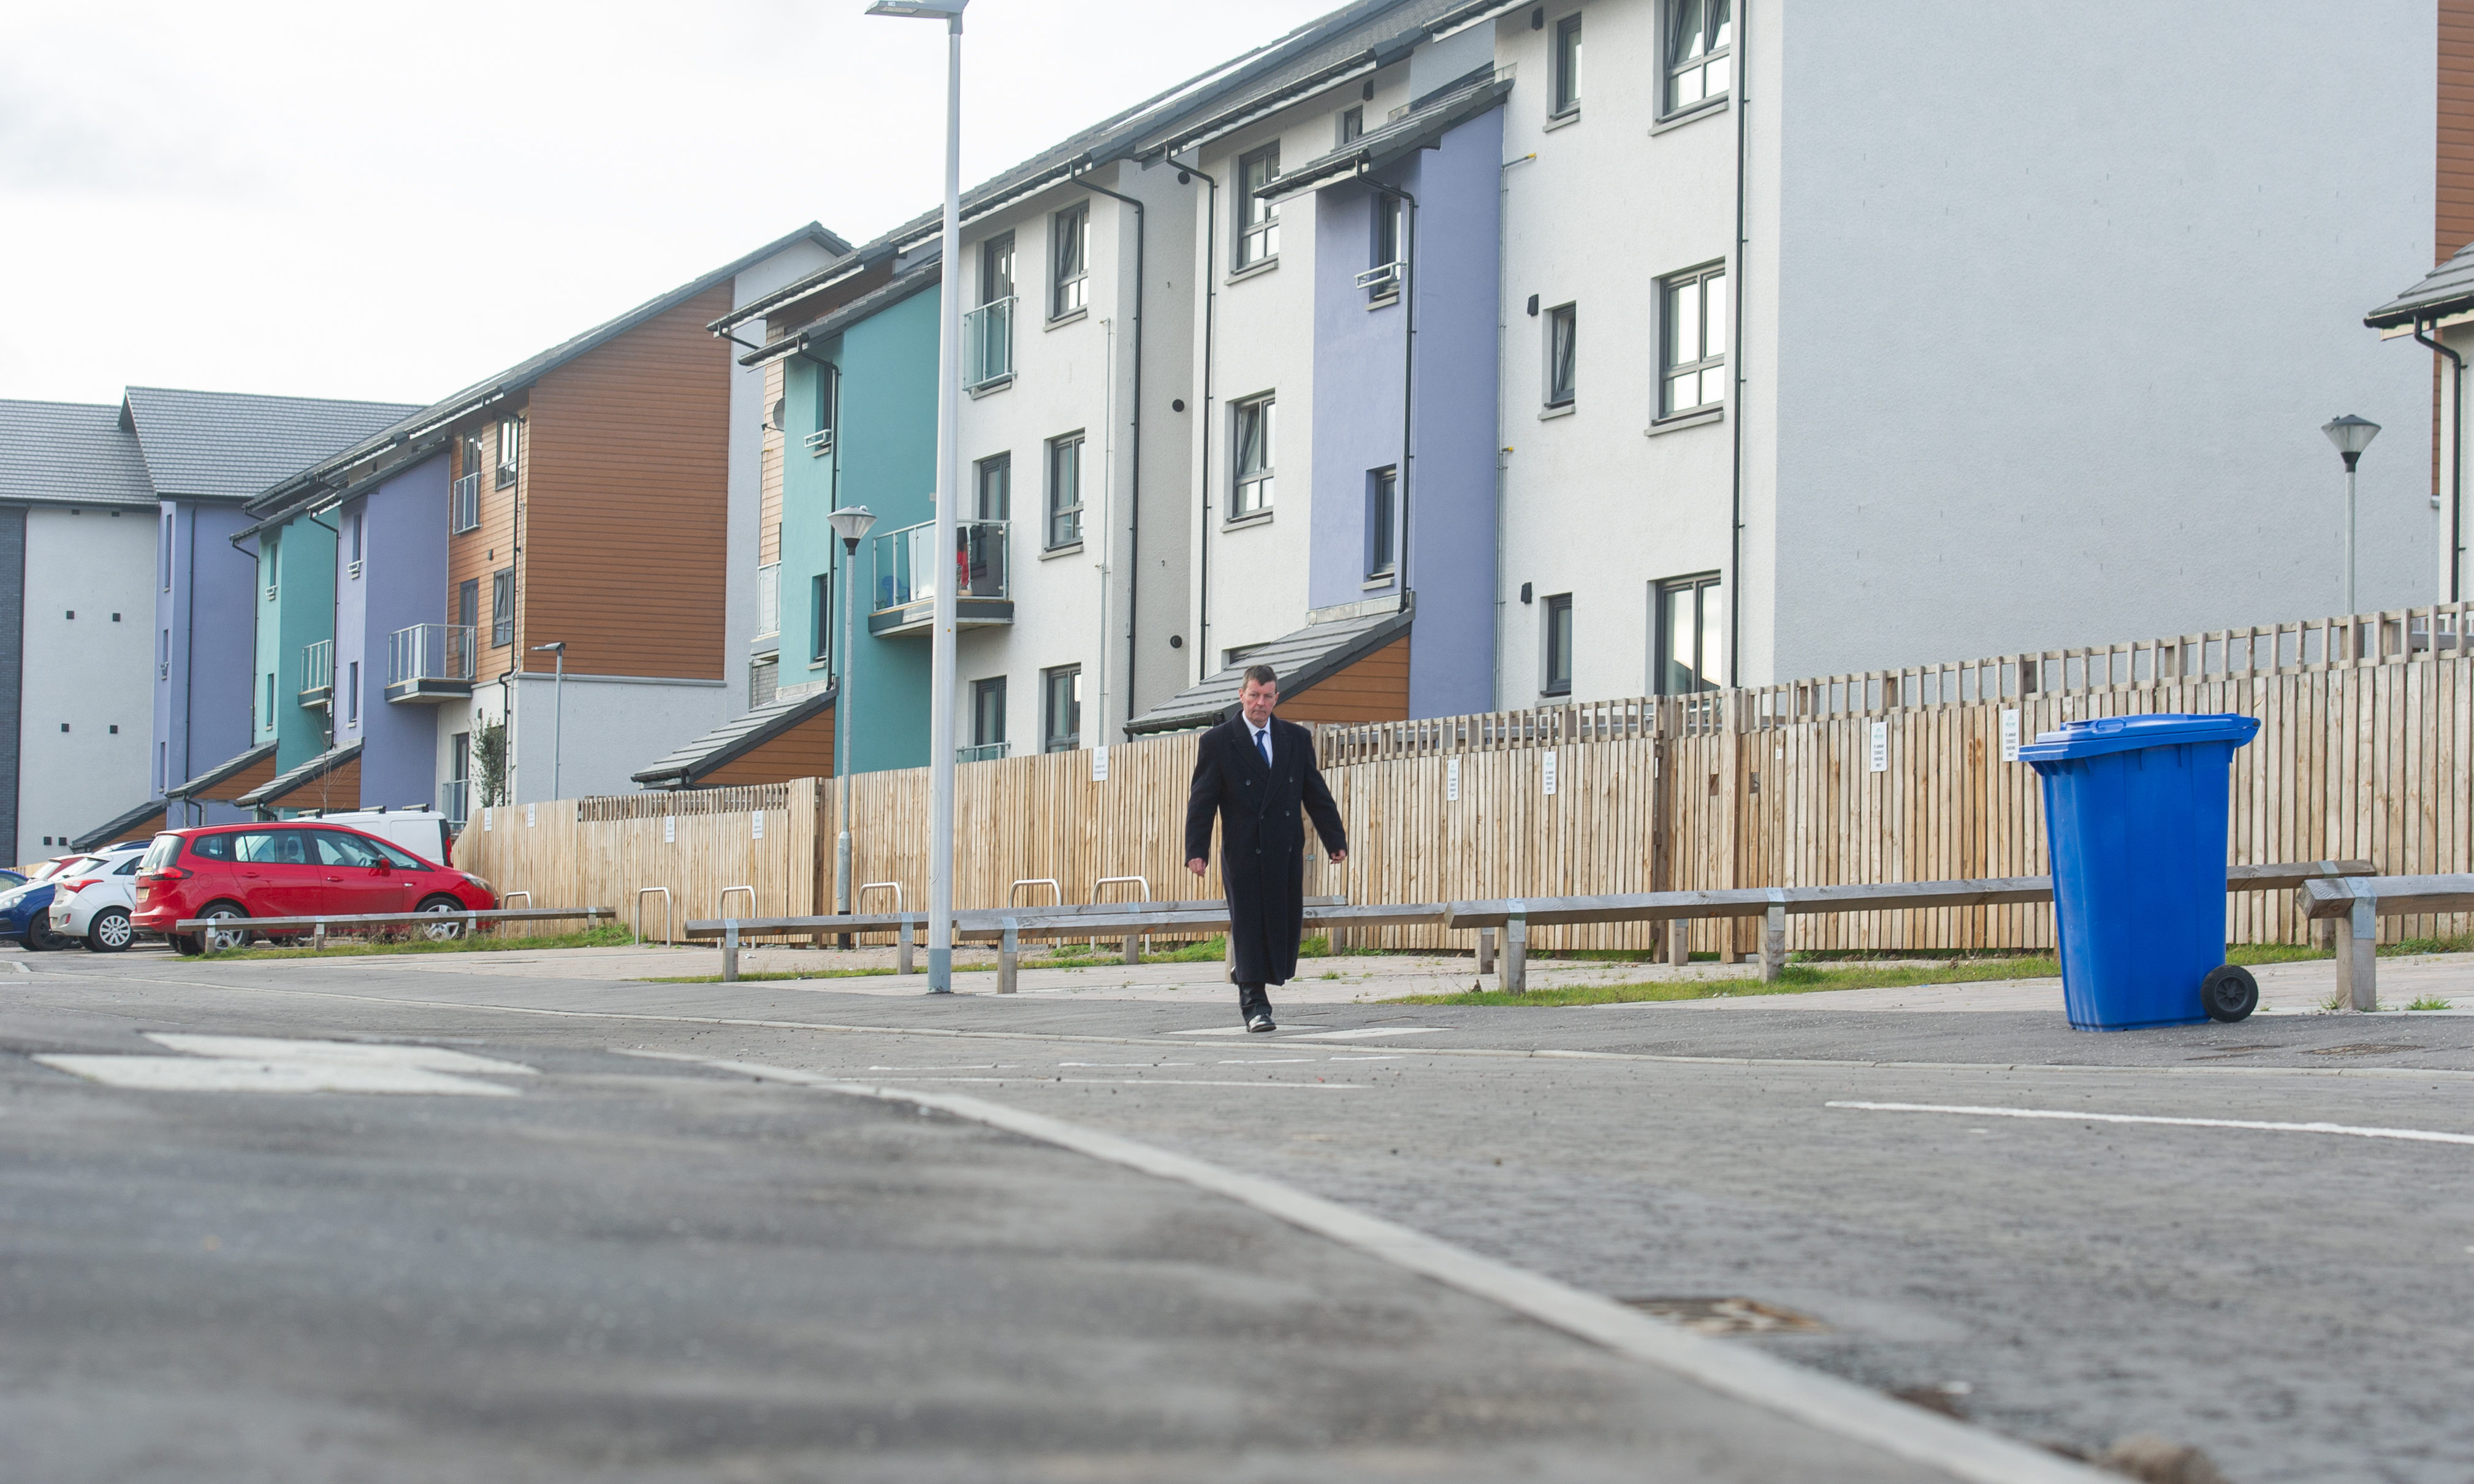 "Affordable Housing" developments such as at Annan Terrace / Kidd Street are being built to meet housing demand